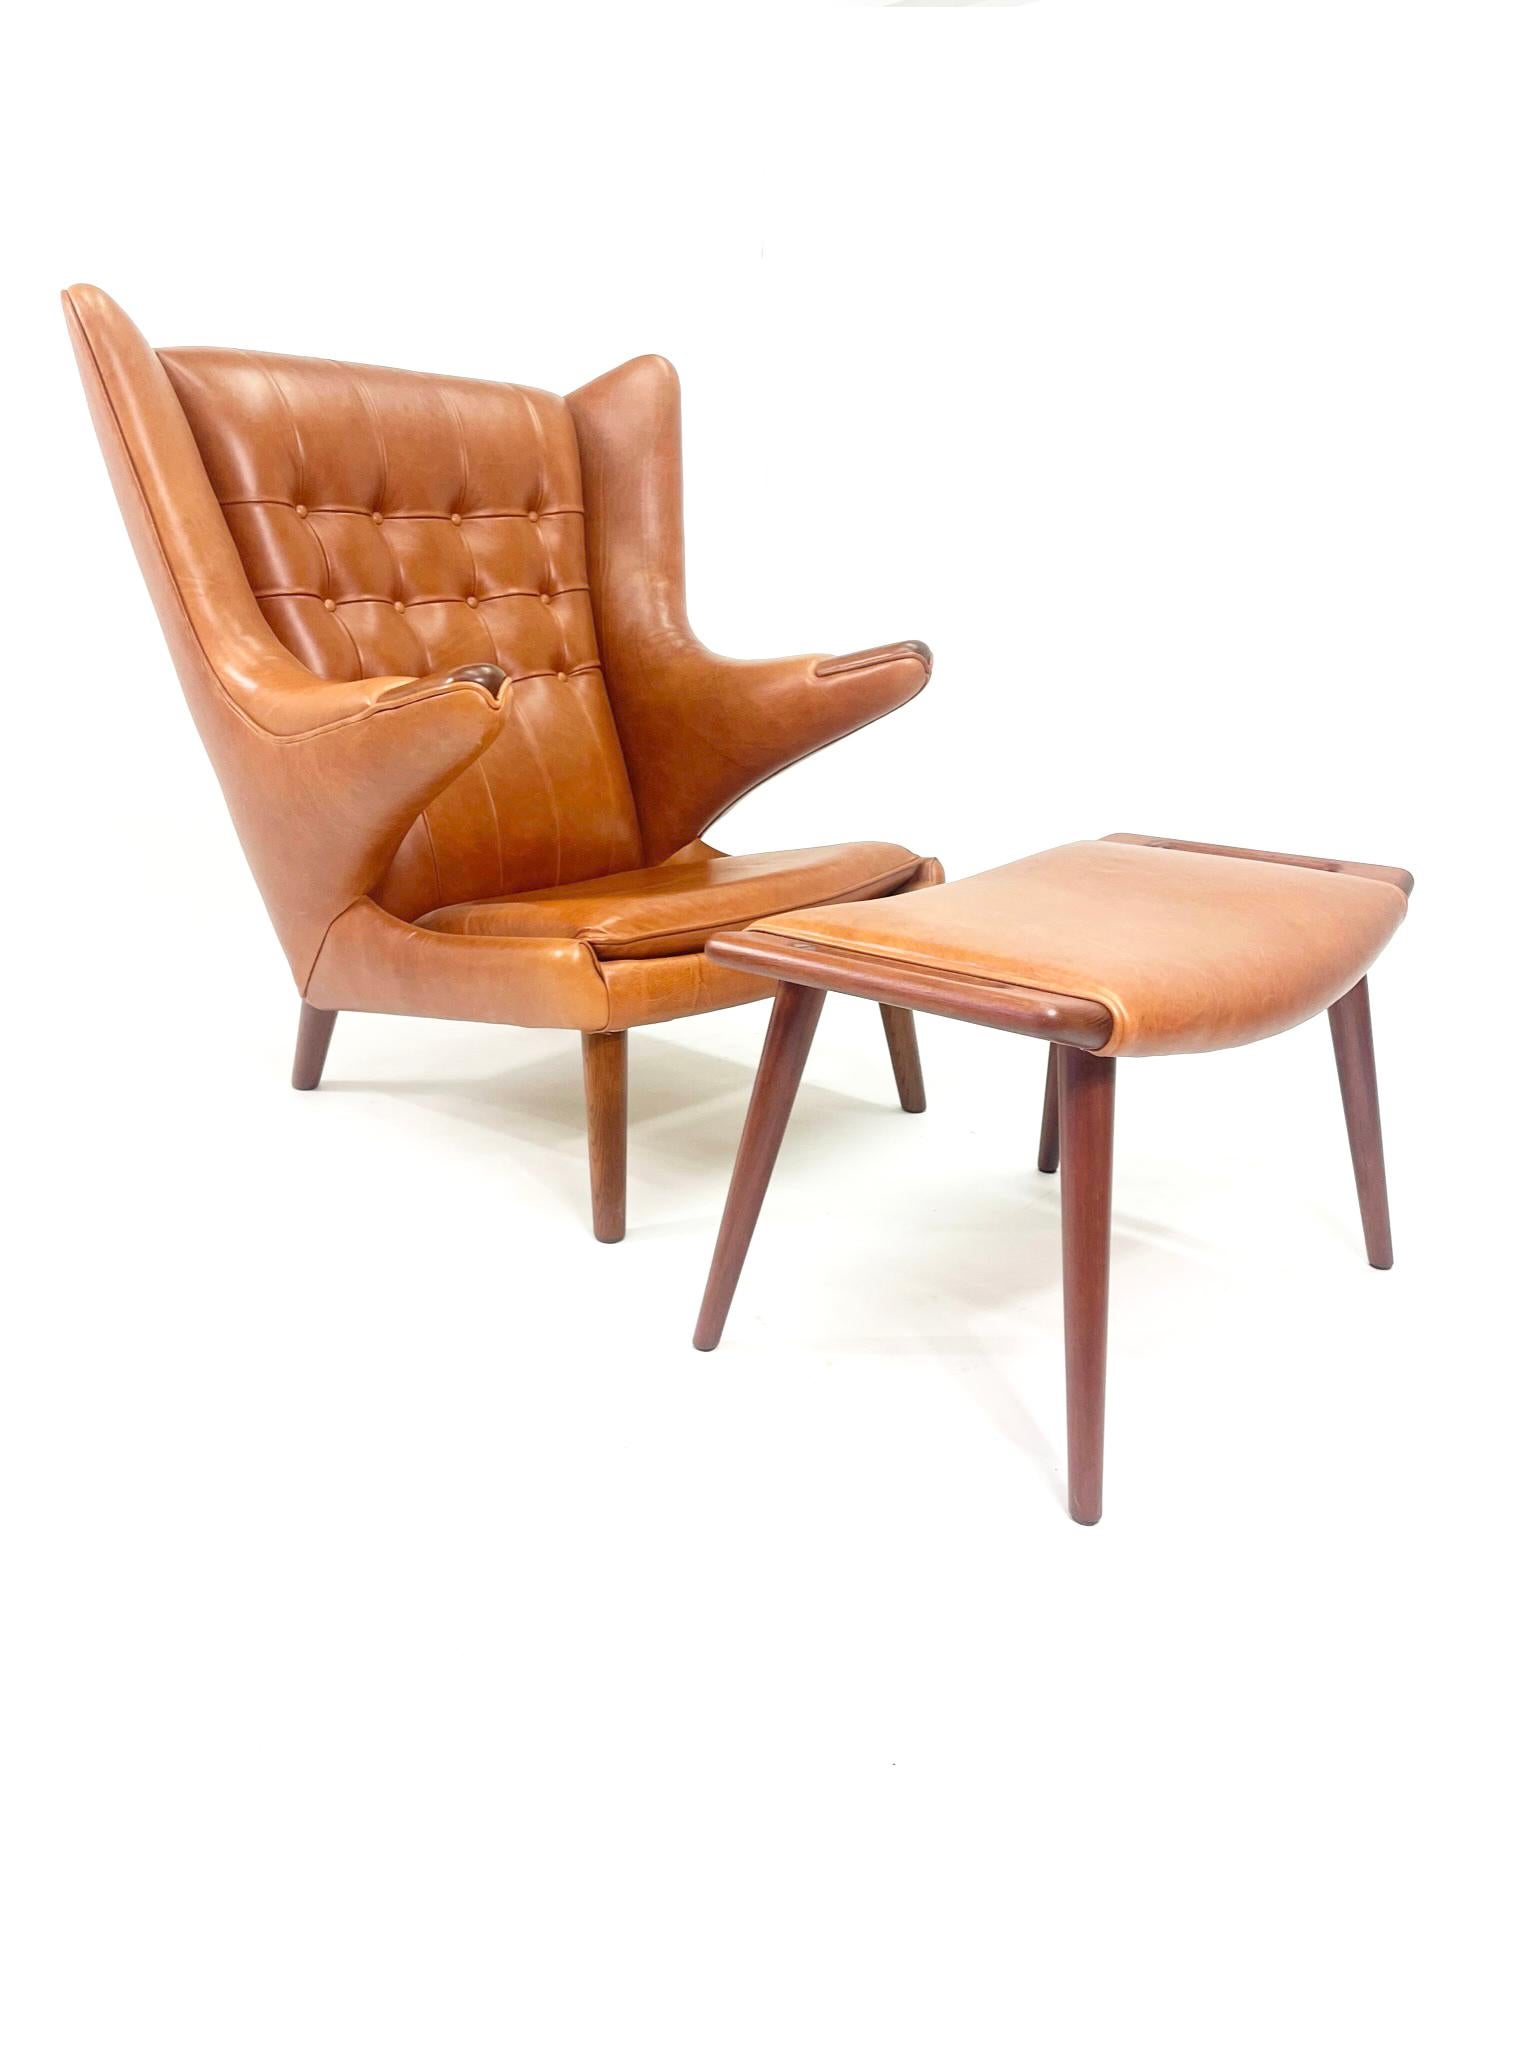 Hans Wegner Papa Bear Chair & Ottoman for A.P. Stolen Denmark, 1950's For Sale 9